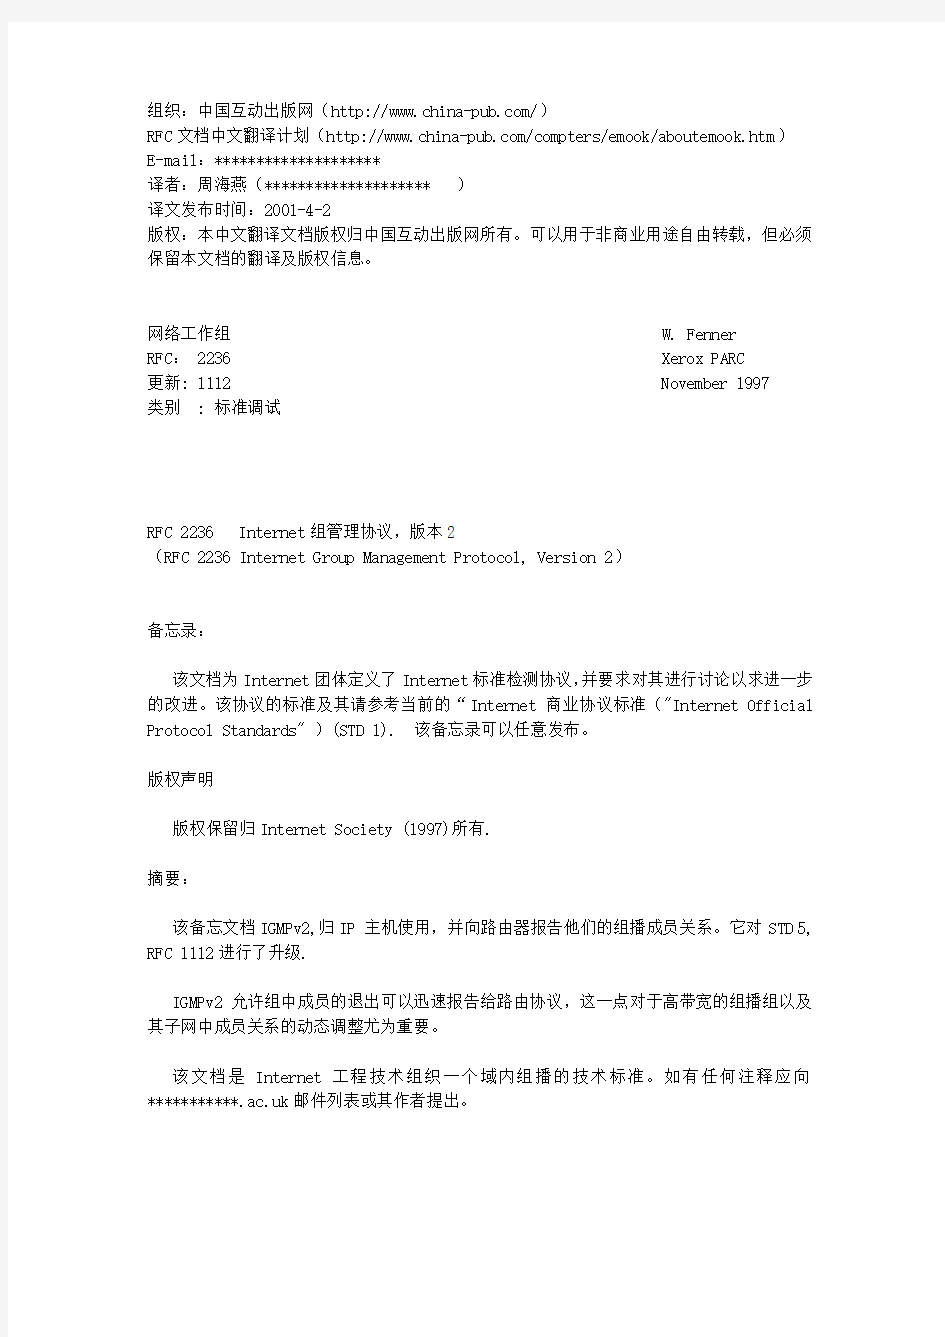 RFC2236 IGMPv2 中文版